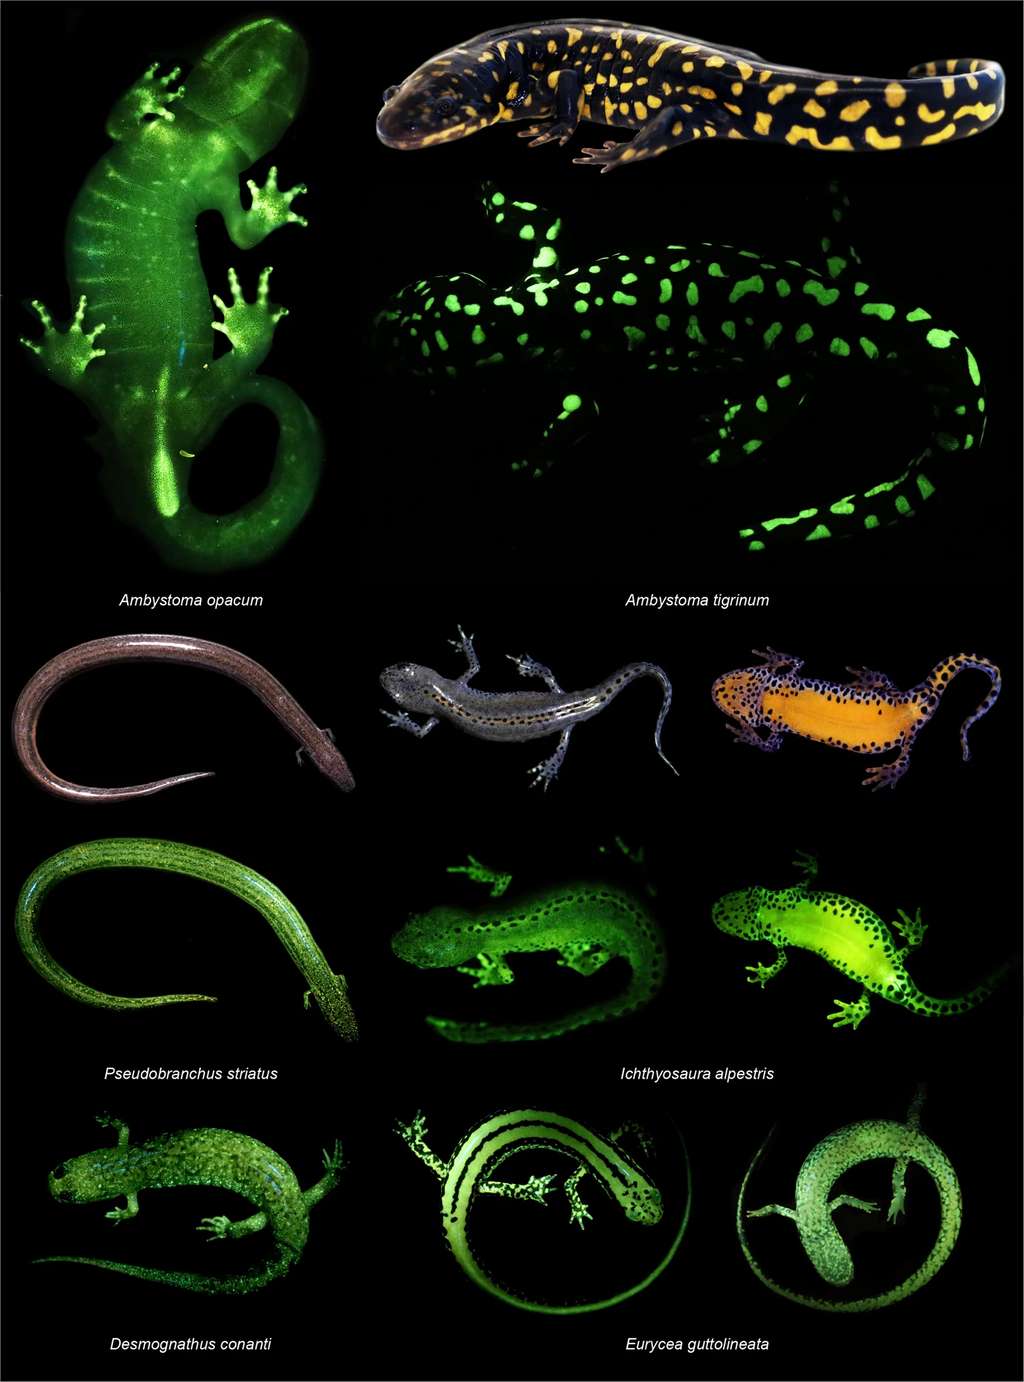 Les différentes espèces de salamandres biofluorescentes testées. © Jennifer Lamb, Matthew Davis, <em>Scientific Reports</em>